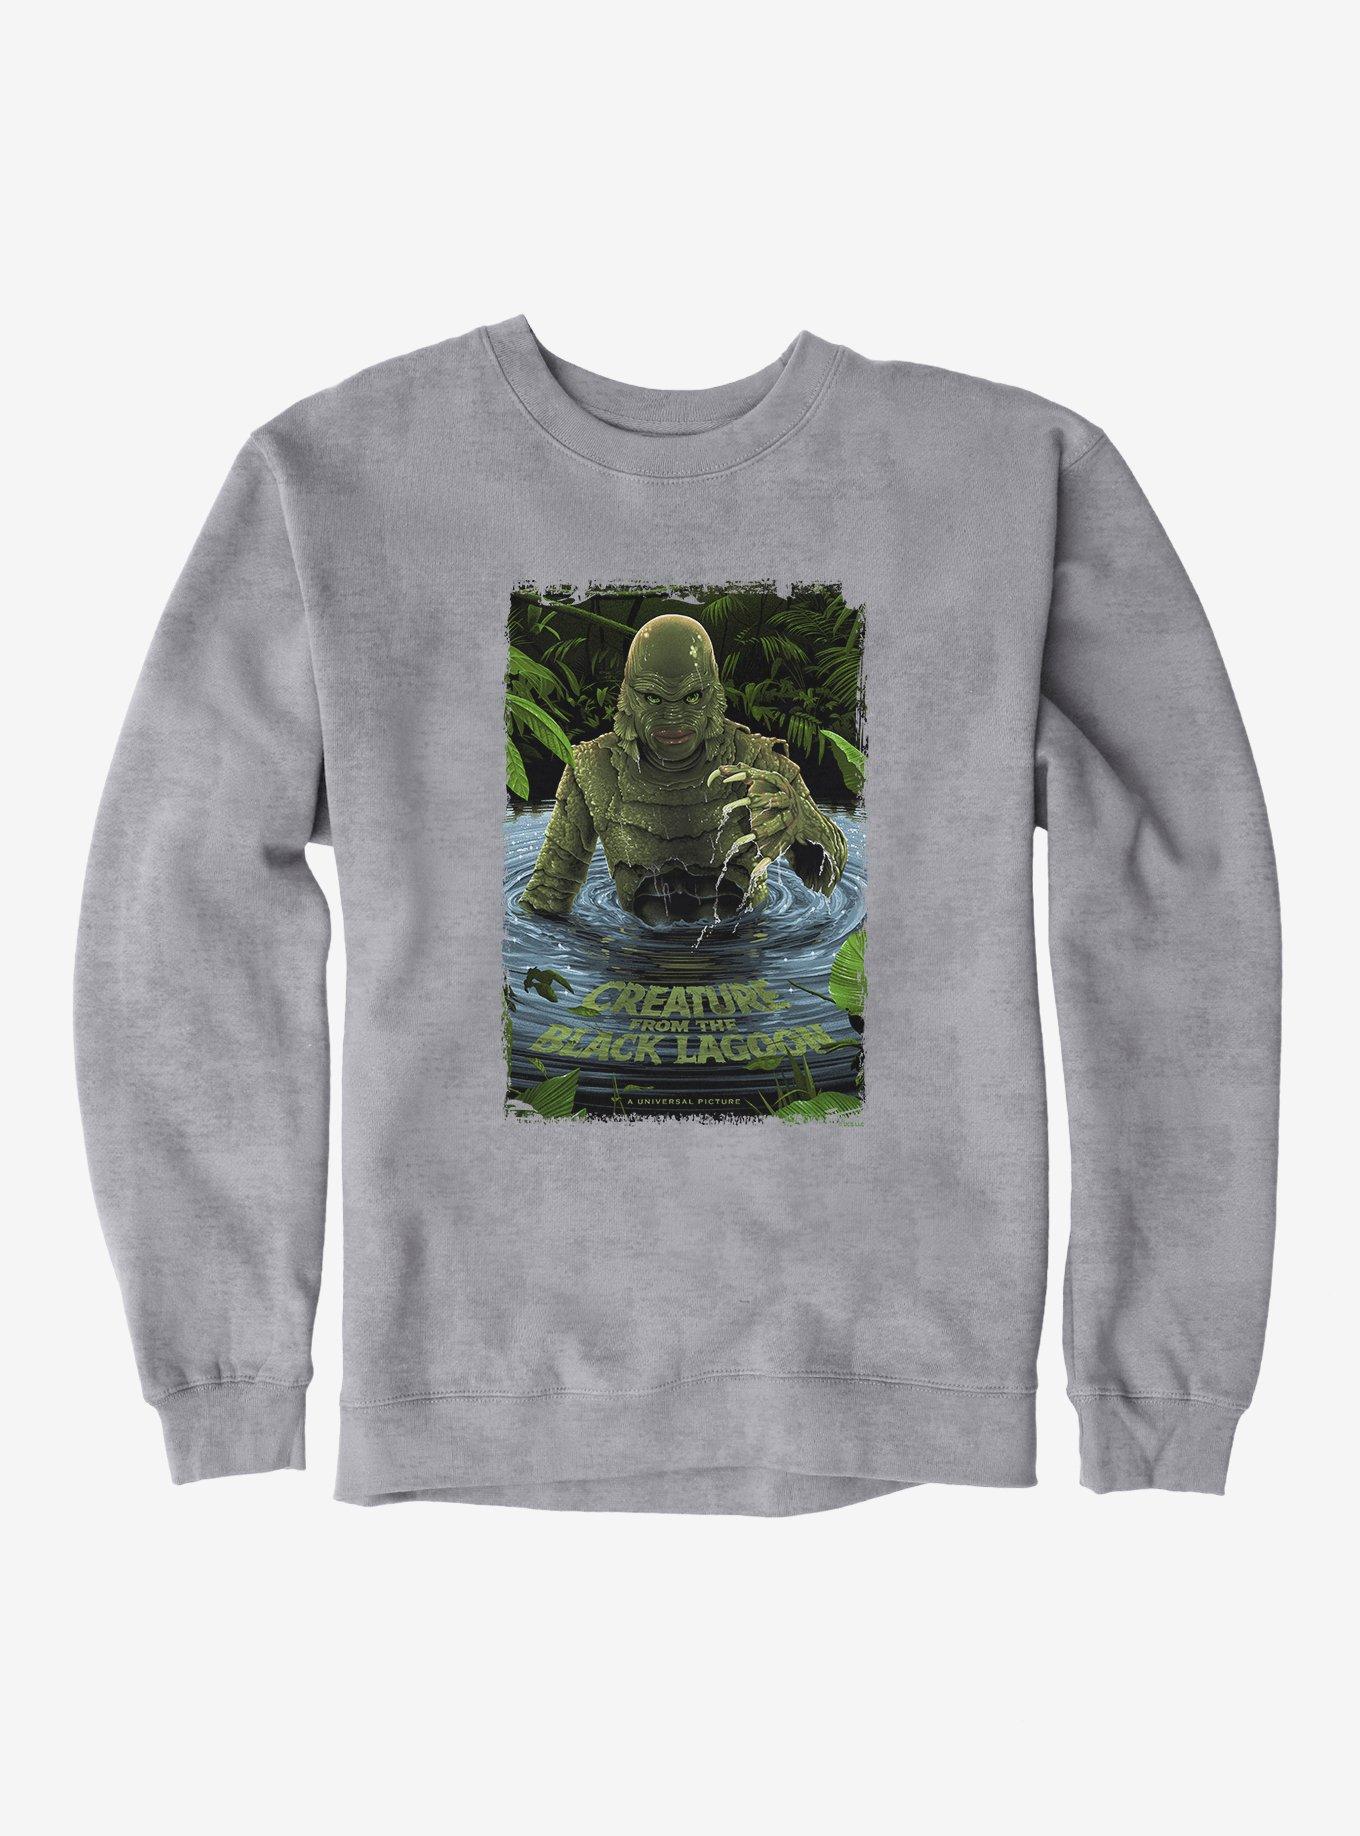 Creature From The Black Lagoon Original Horror Show Movie Poster Sweatshirt